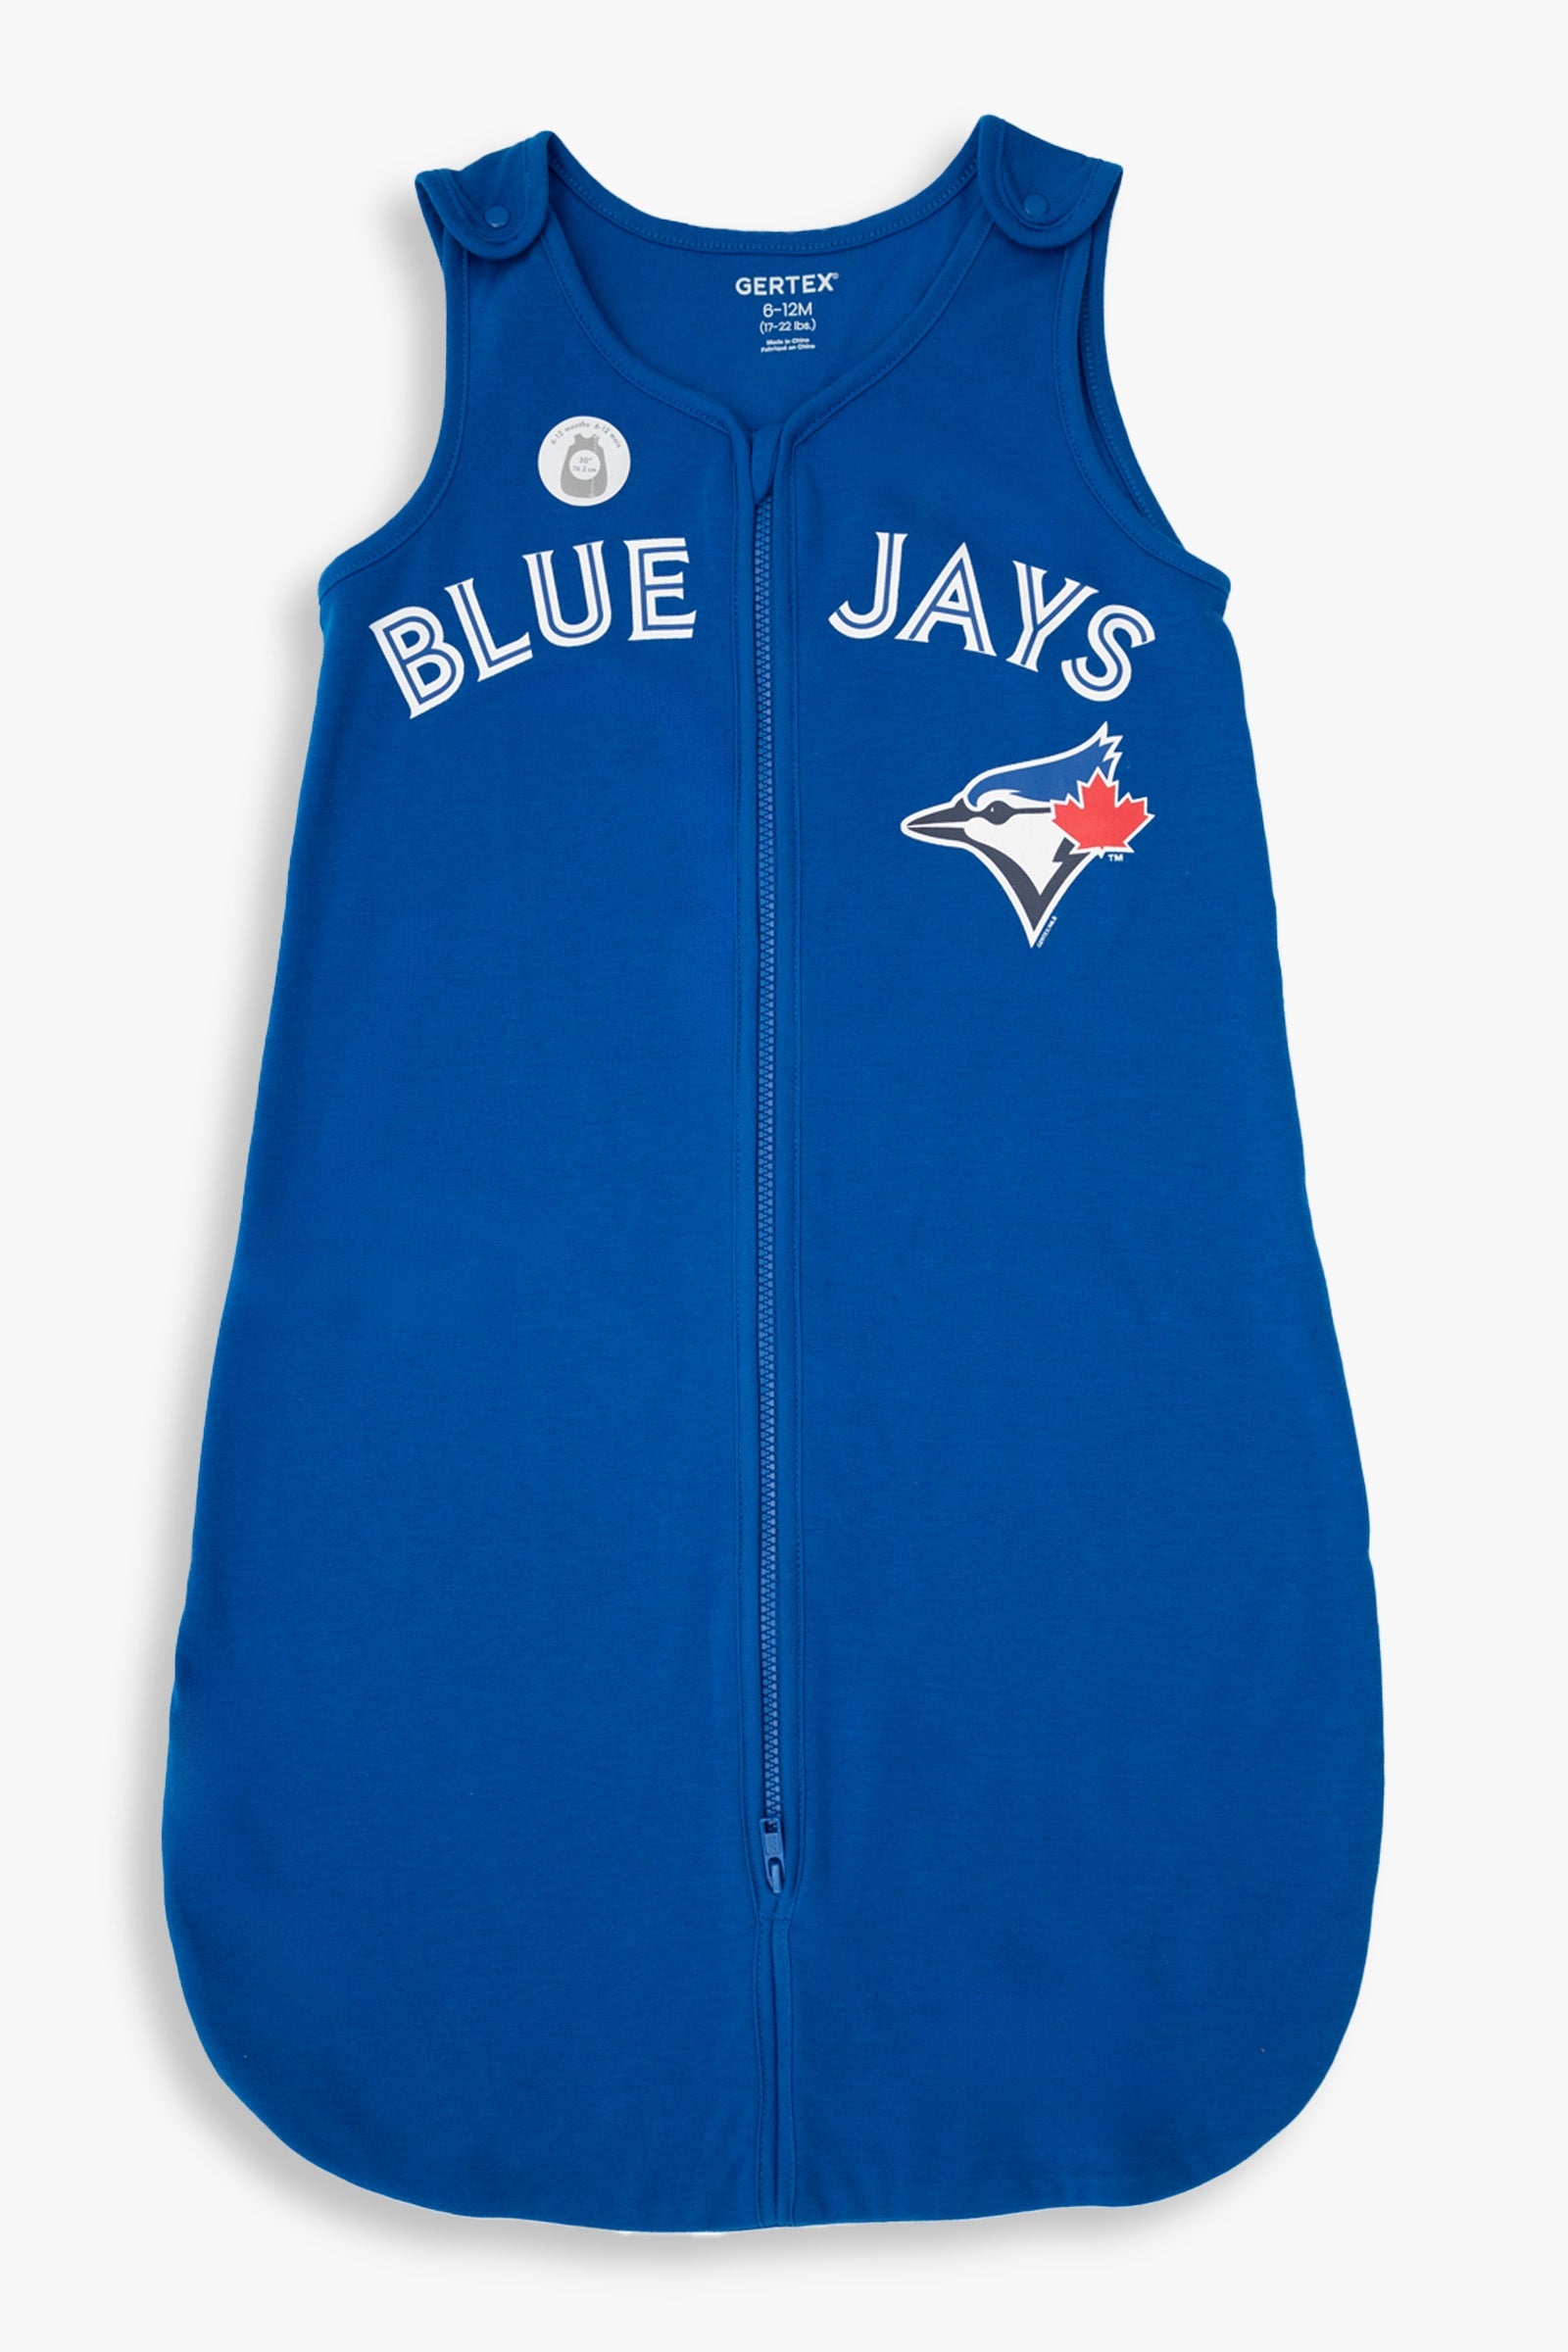 Gertex MLB Toronto Blue Jays Infant Baby Zip-Up Sleep Bag